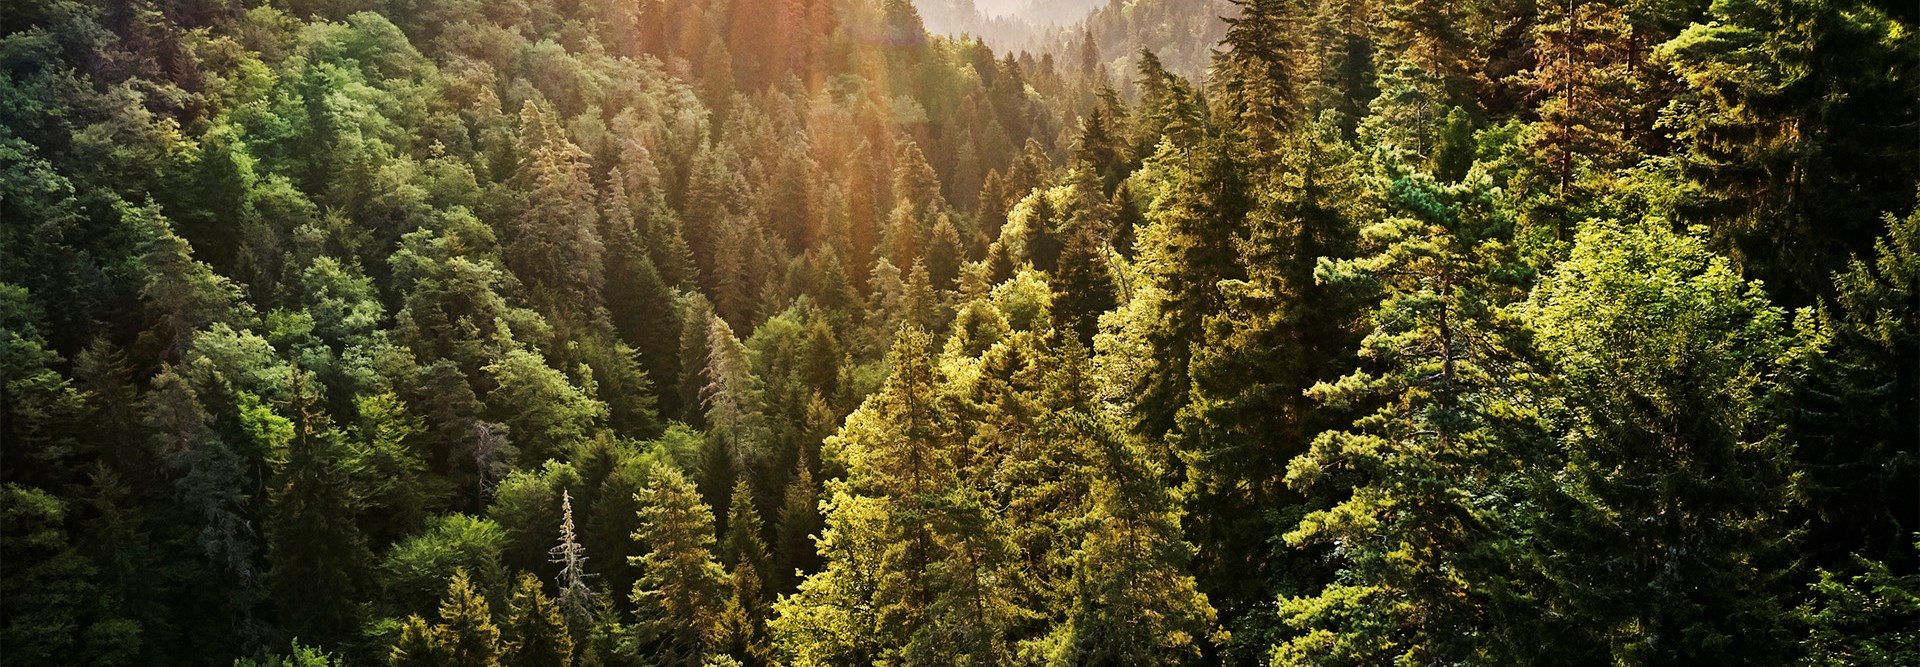 Como preservar e proteger as Florestas?